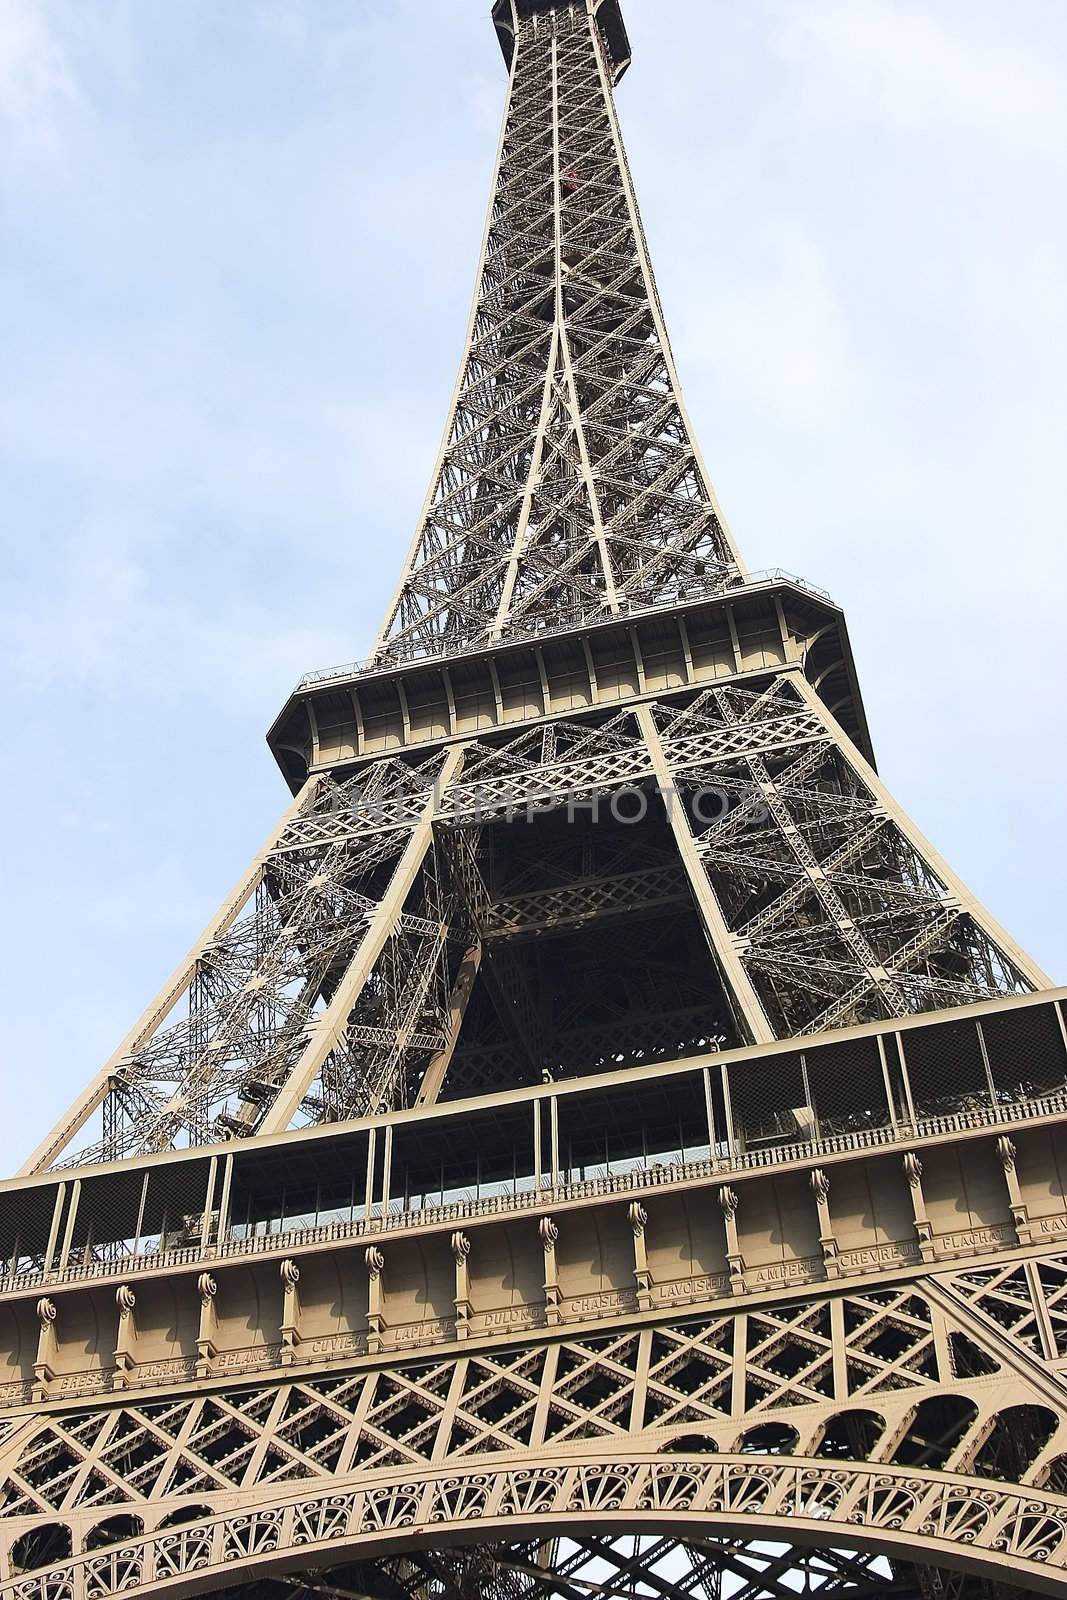 The Eiffel Tower, Paris by miradrozdowski